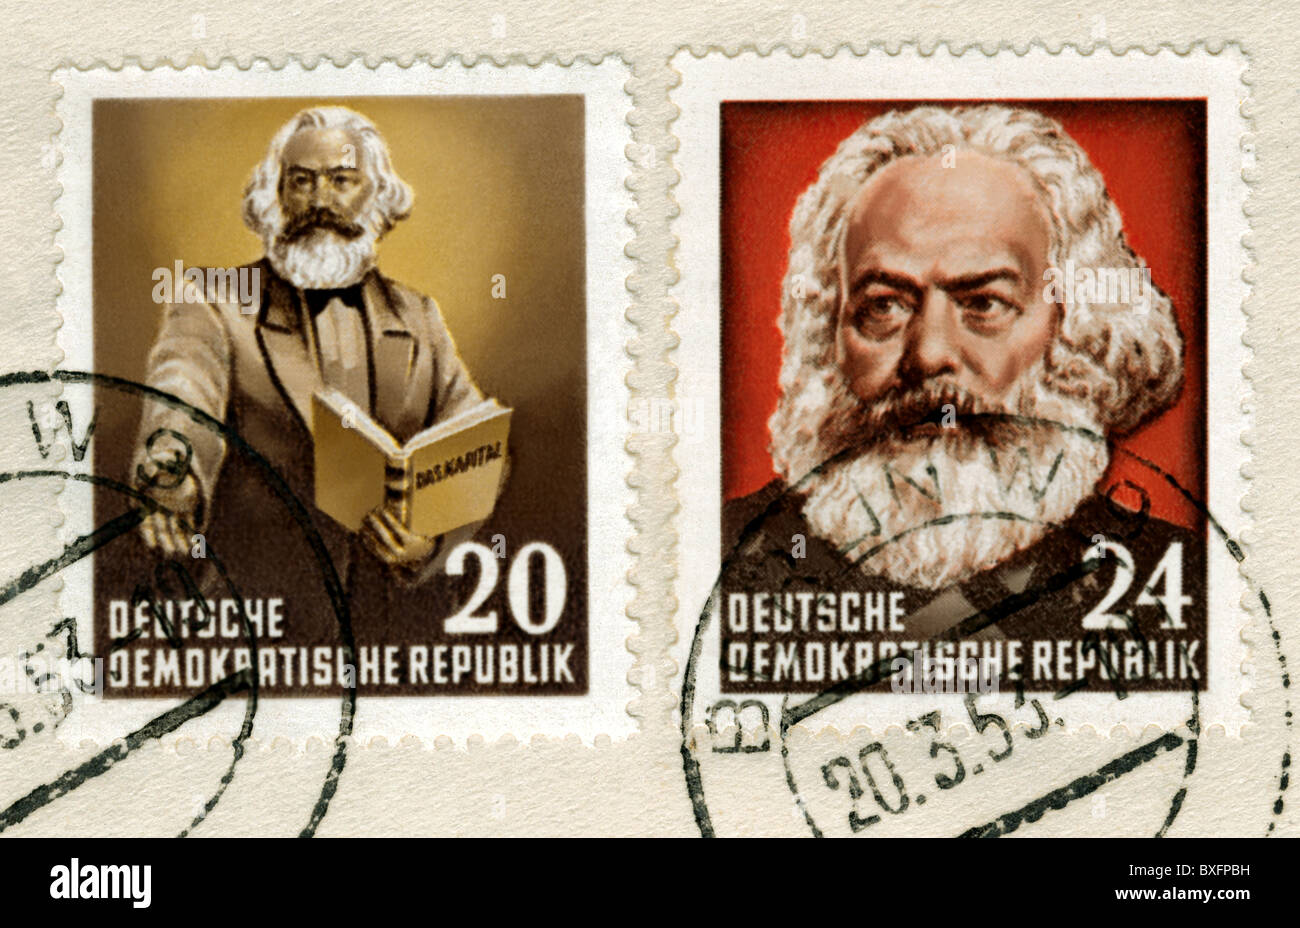 Marx, Karl, 5.5.1818 - 14.3.1883, German philosopher, stamps, half length, portrait, GDR, 1953, Stock Photo